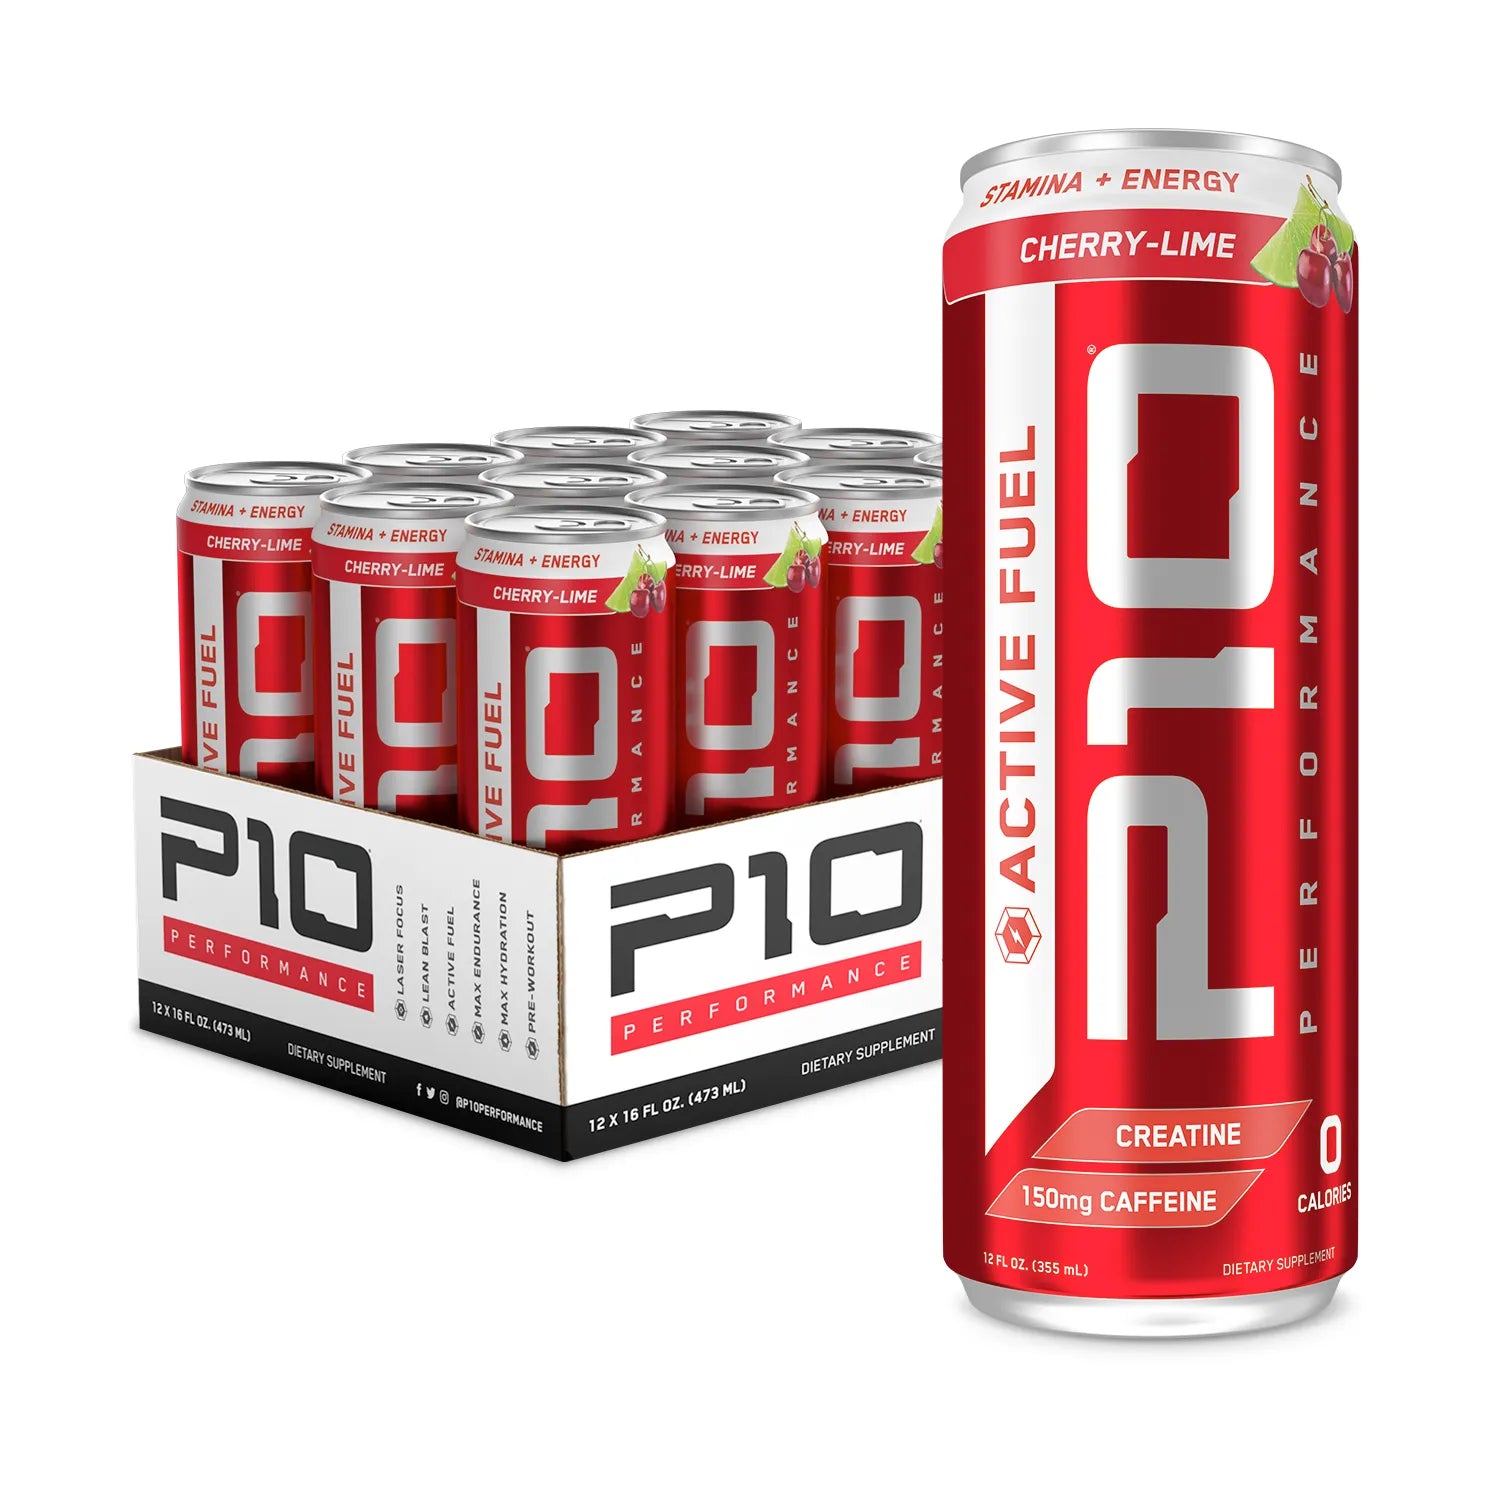 P10 Performance - Active Fuel - Cherry Lime